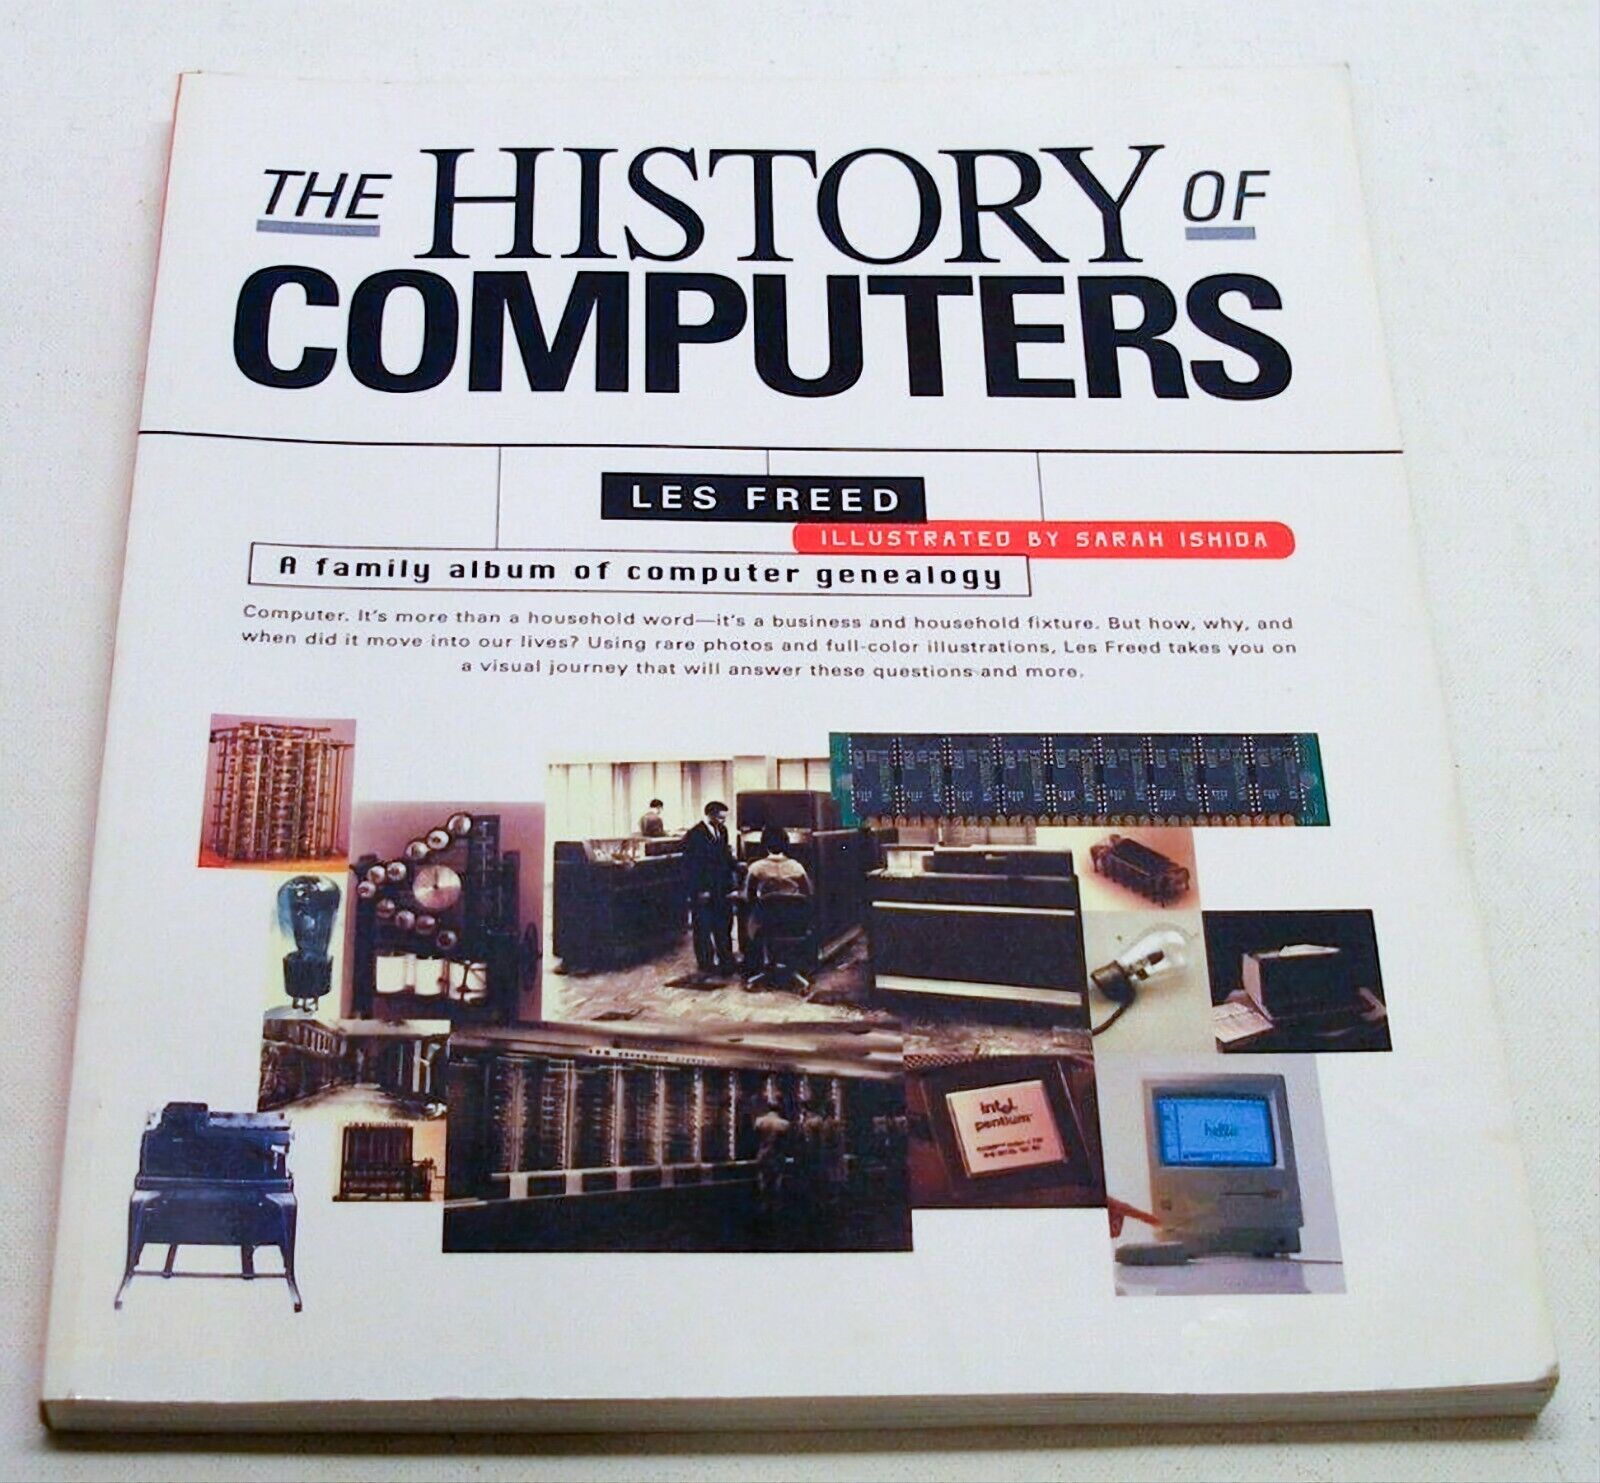 UNIVAC IBM 701 650 Apple 1, II Apple Lisa DEC PDP-8 Altair 8800 Computer History